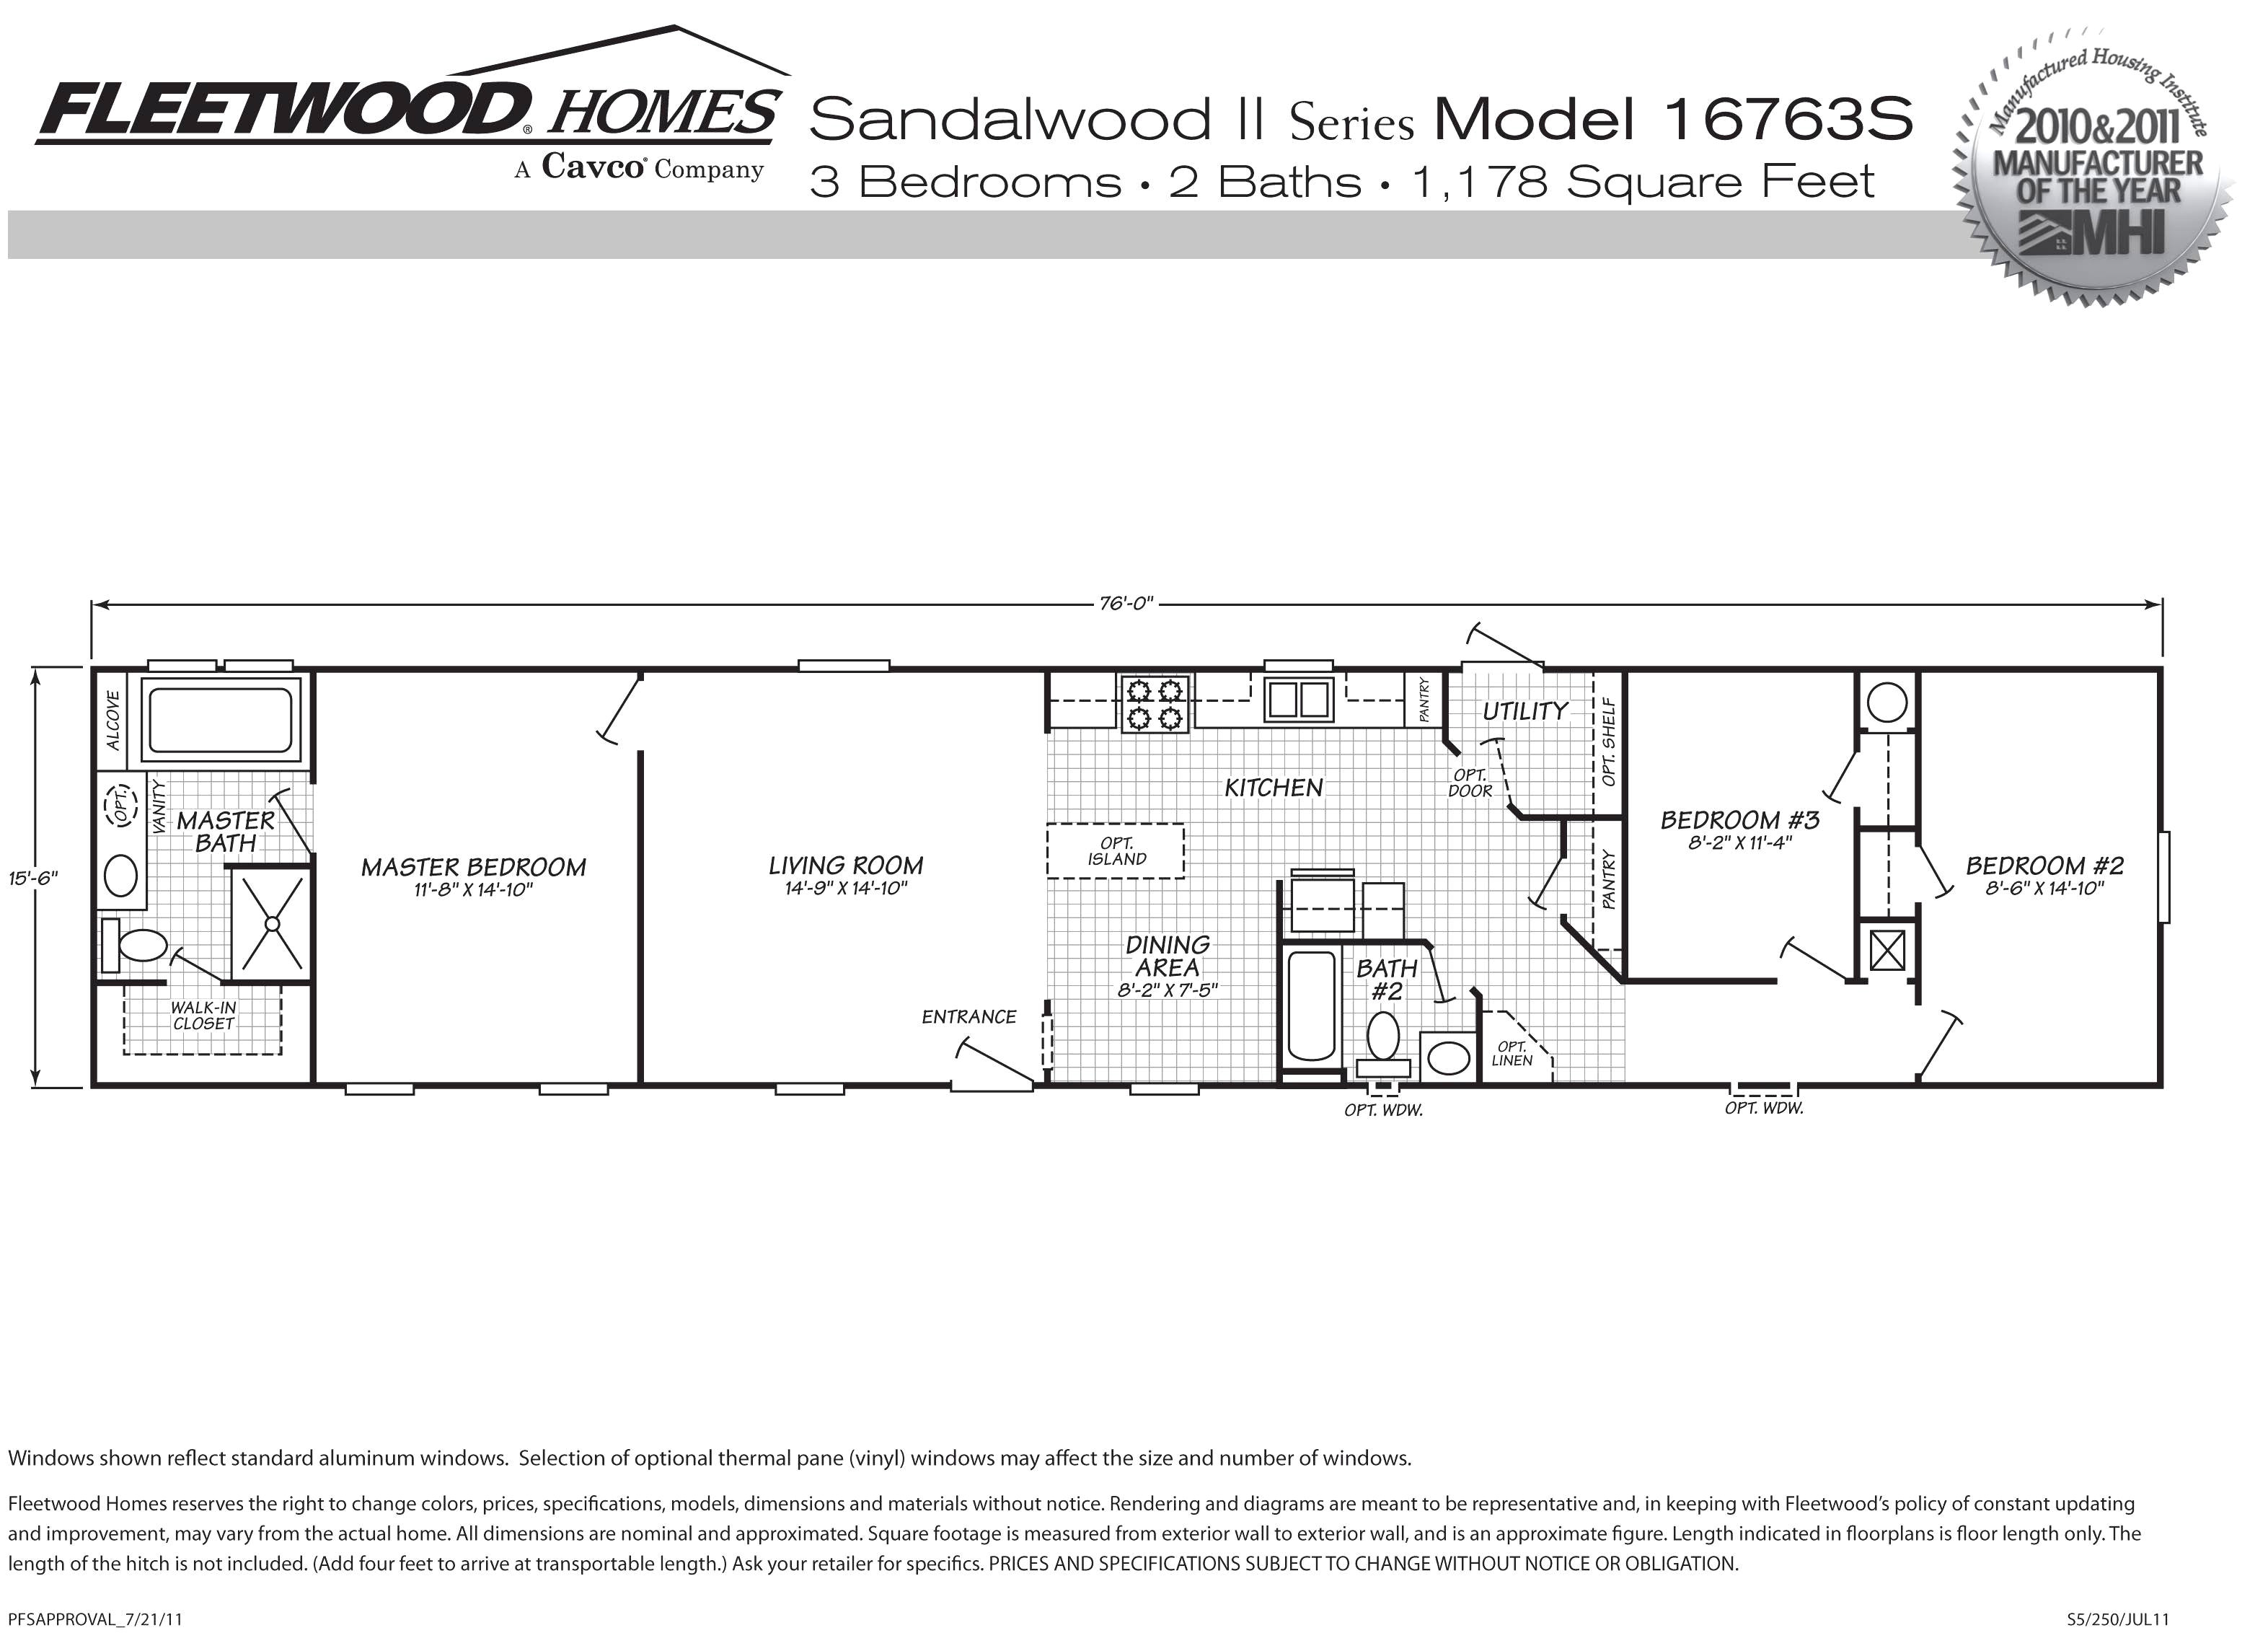 prepossessing modular homes plans modular home floor plans and prices luxury floor plans 0d